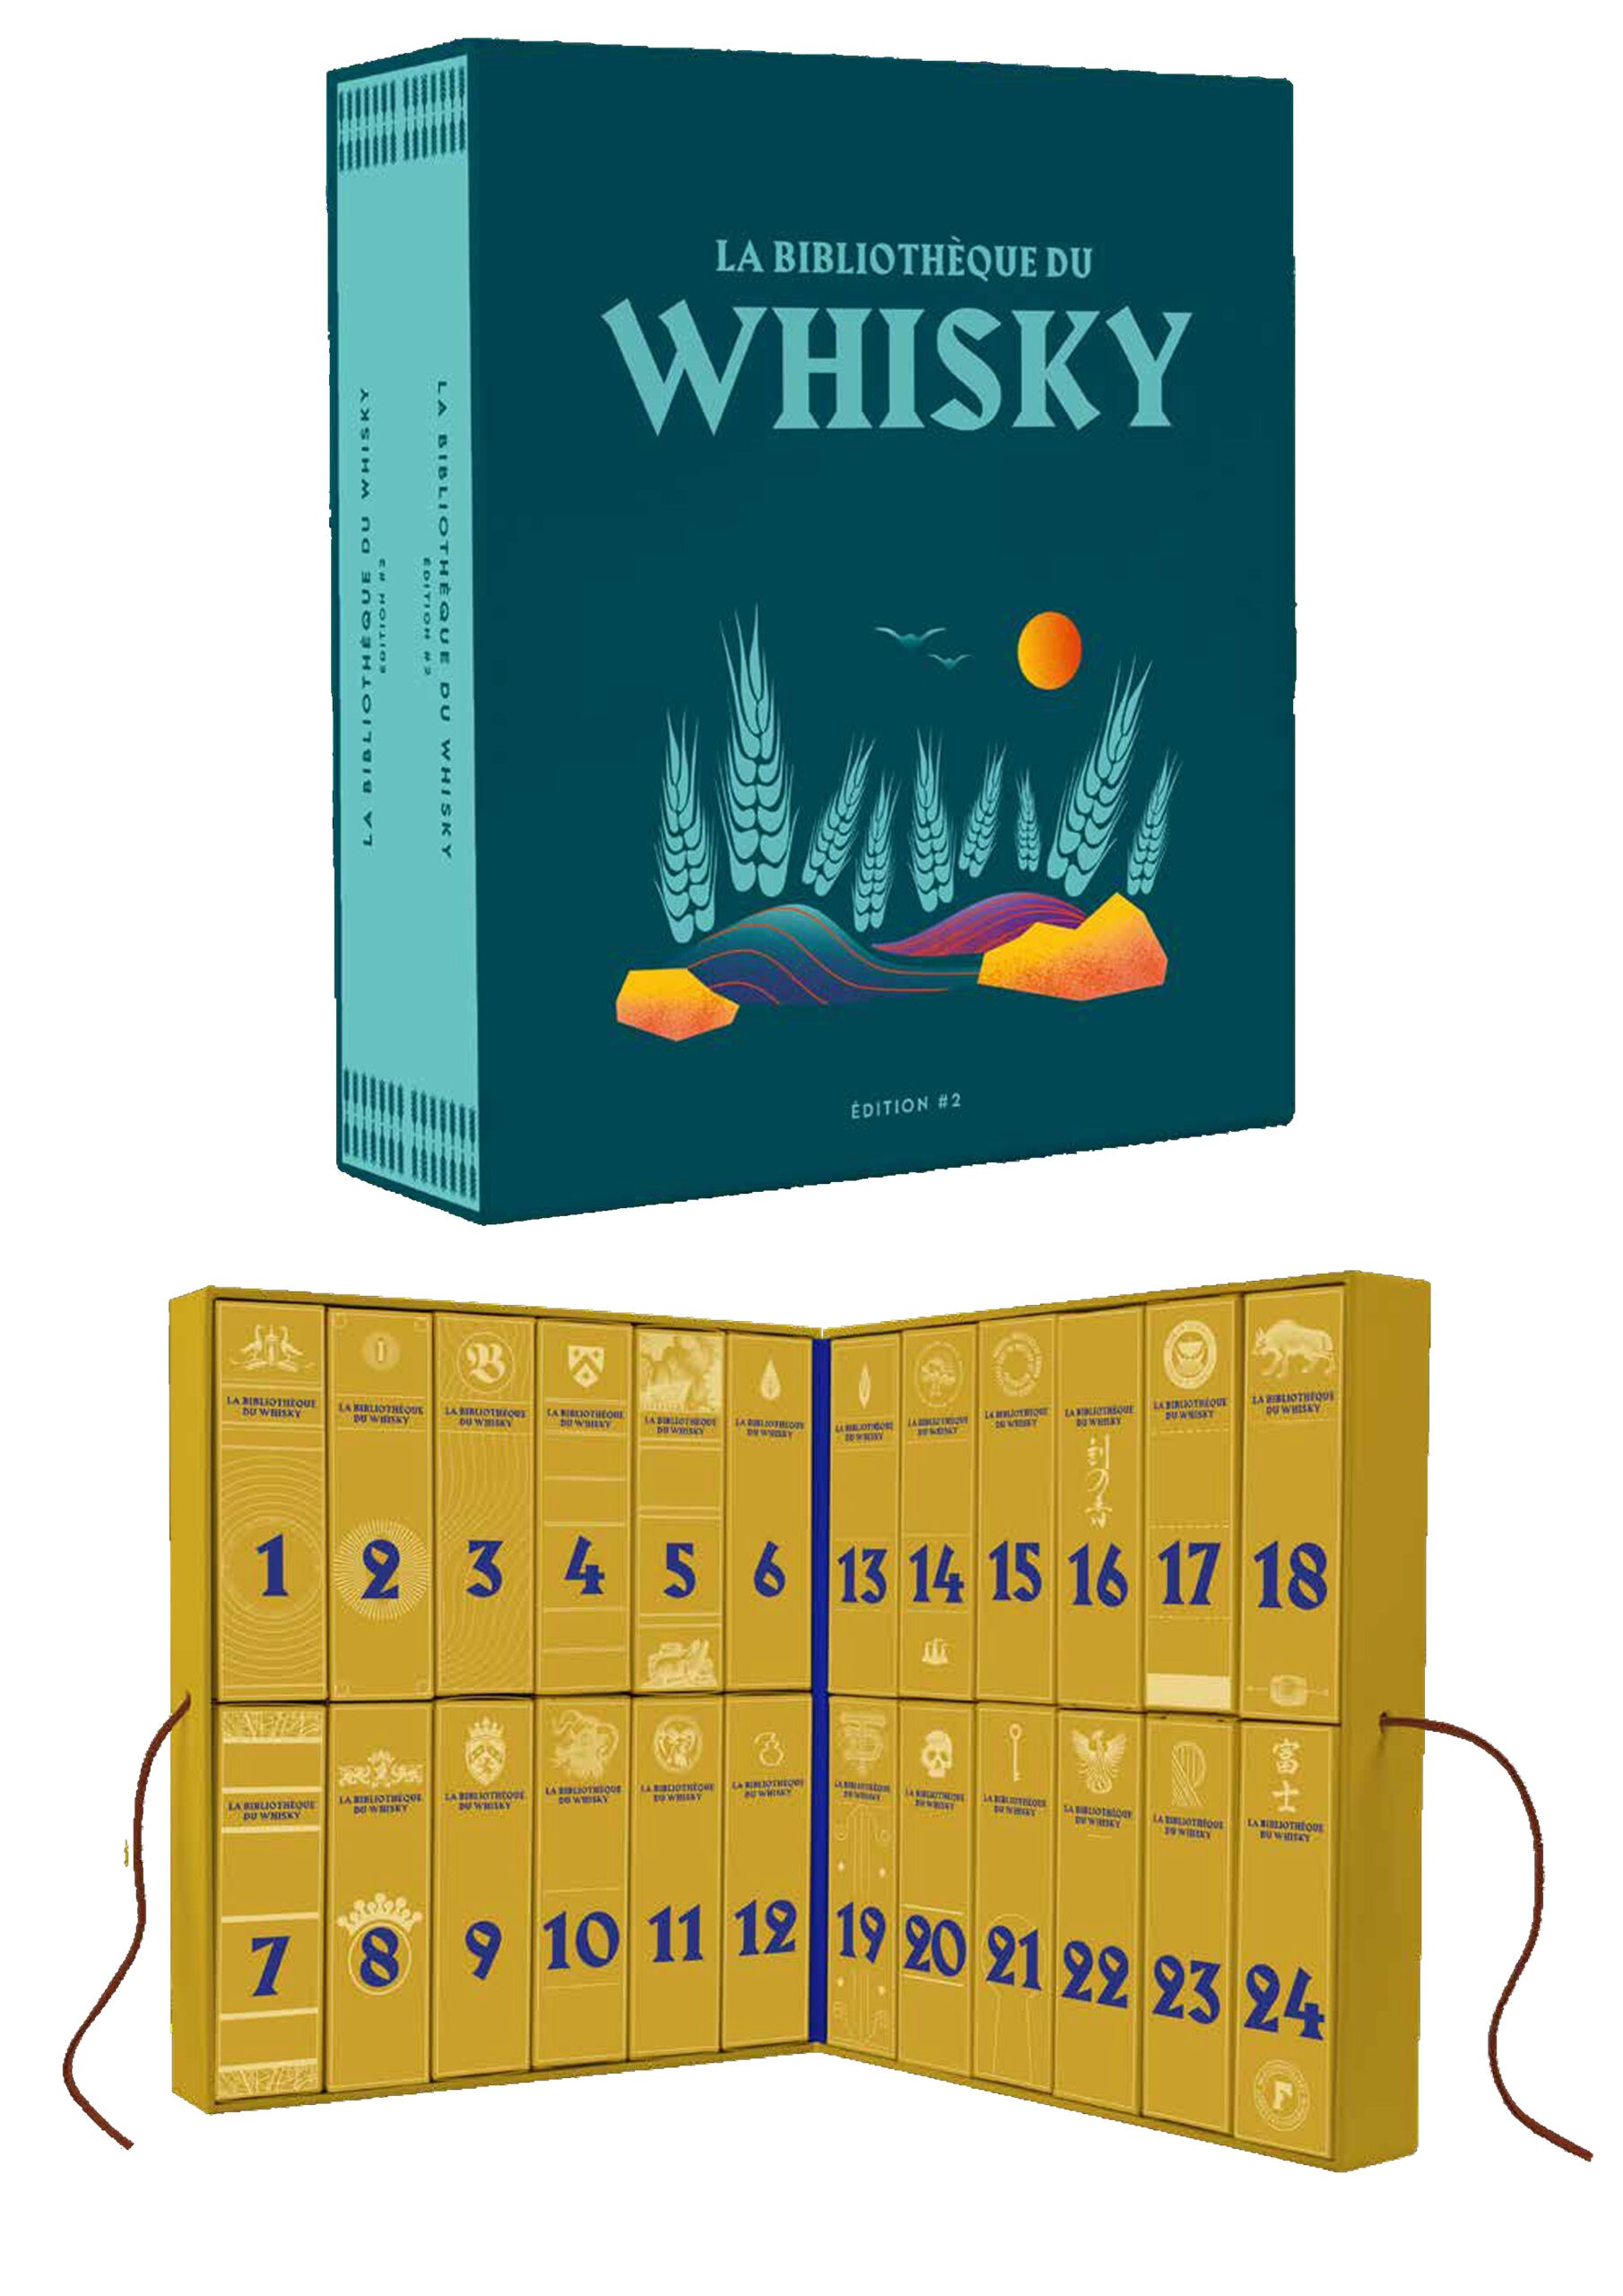 Advent Scotch and Malt Whiskies Calendar